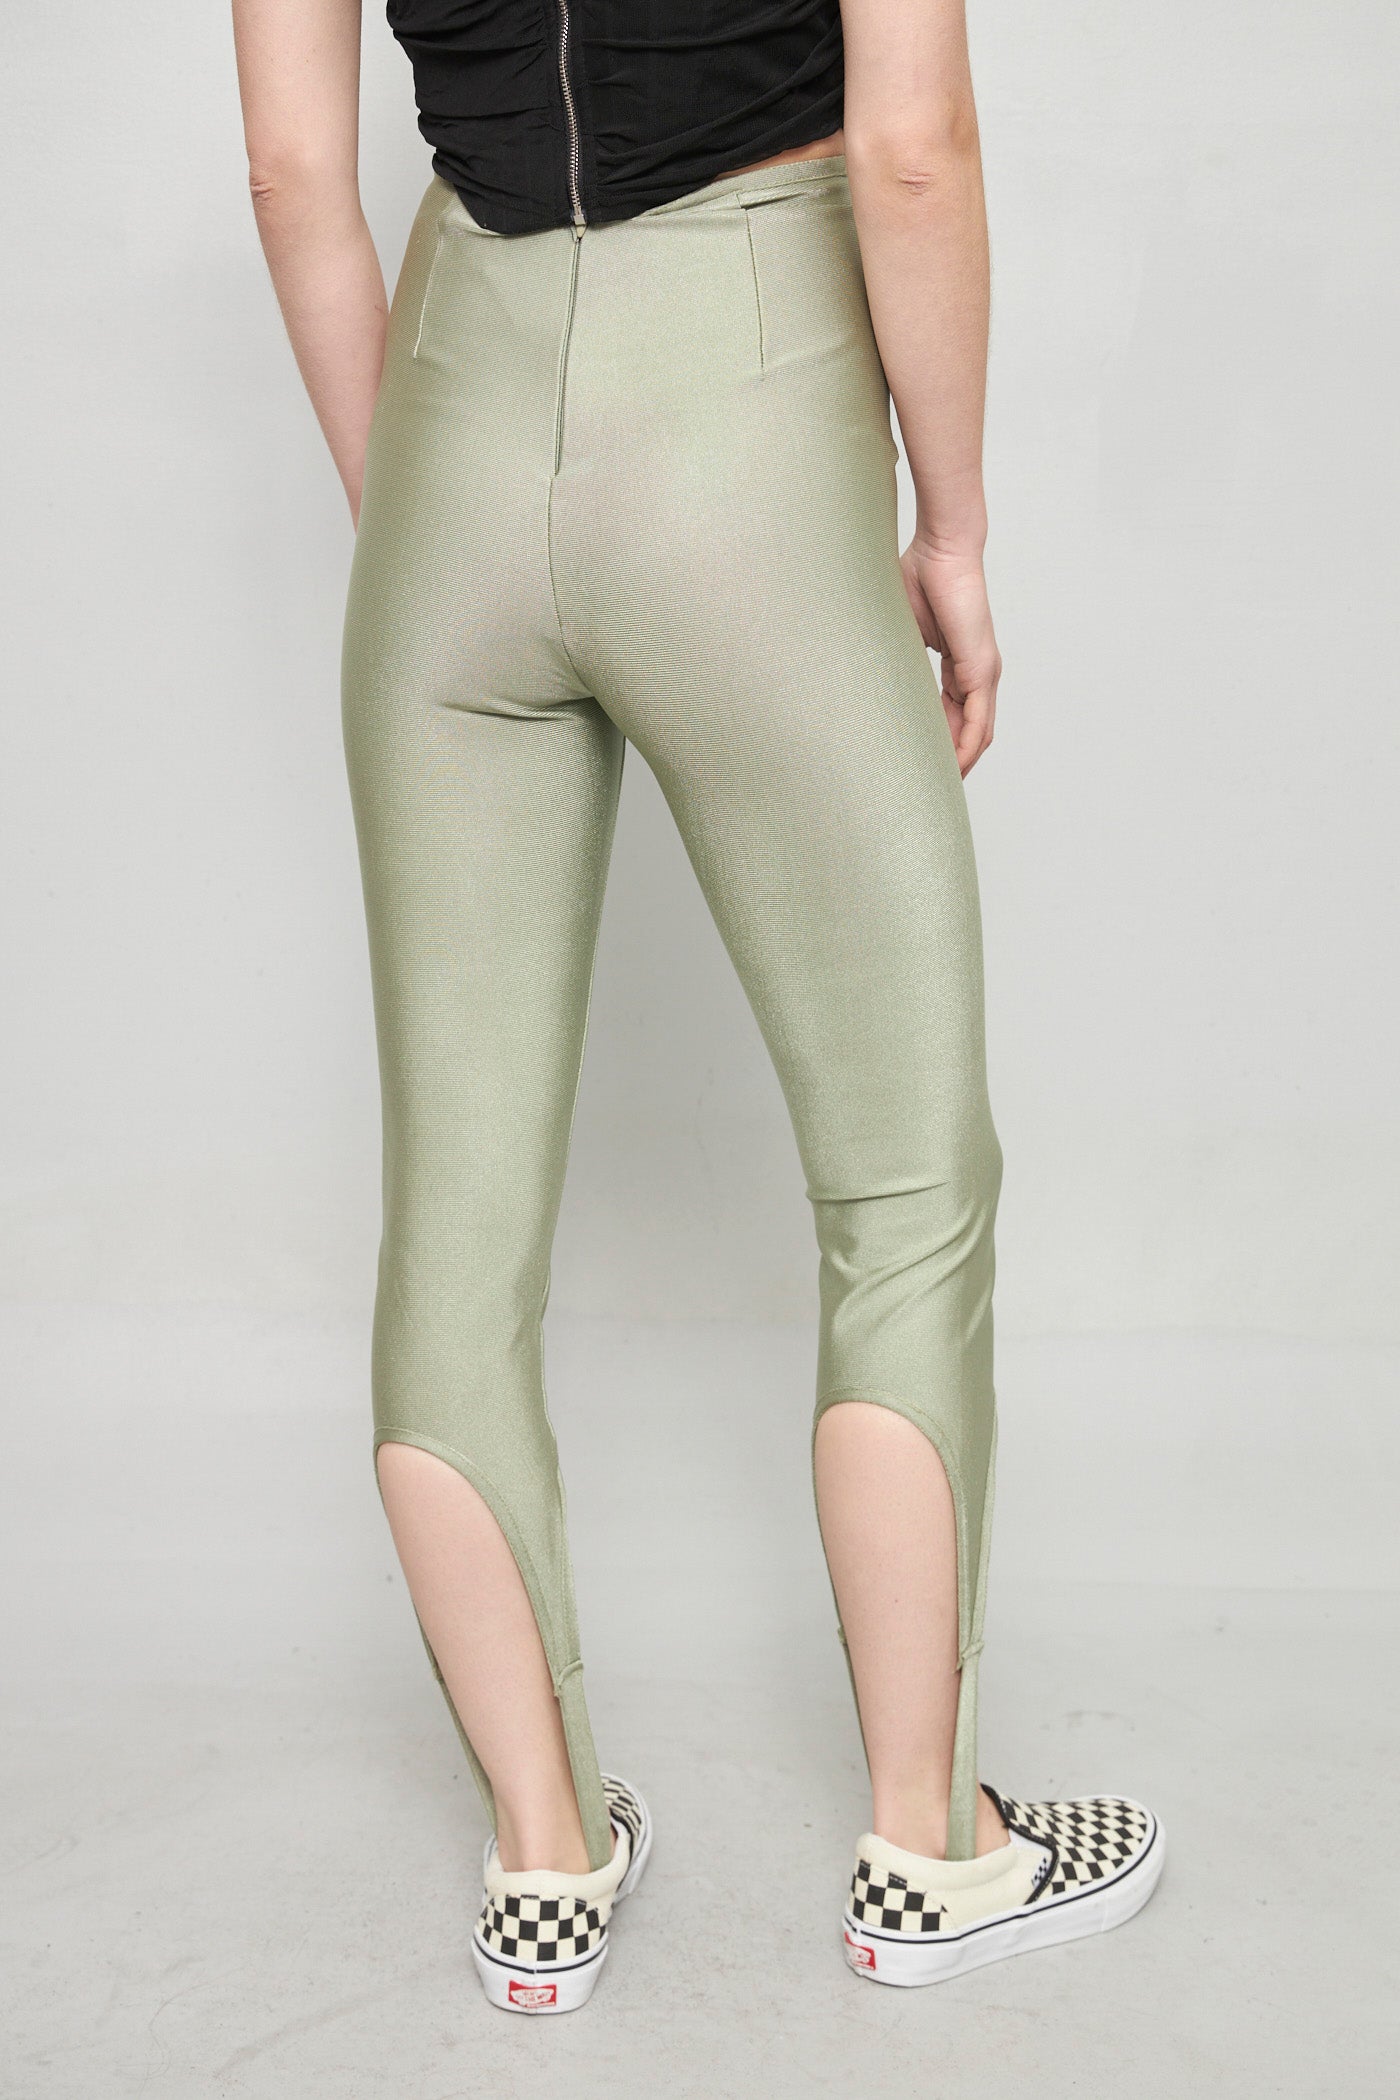 Pantalon casual reciclado verde missguided talla S